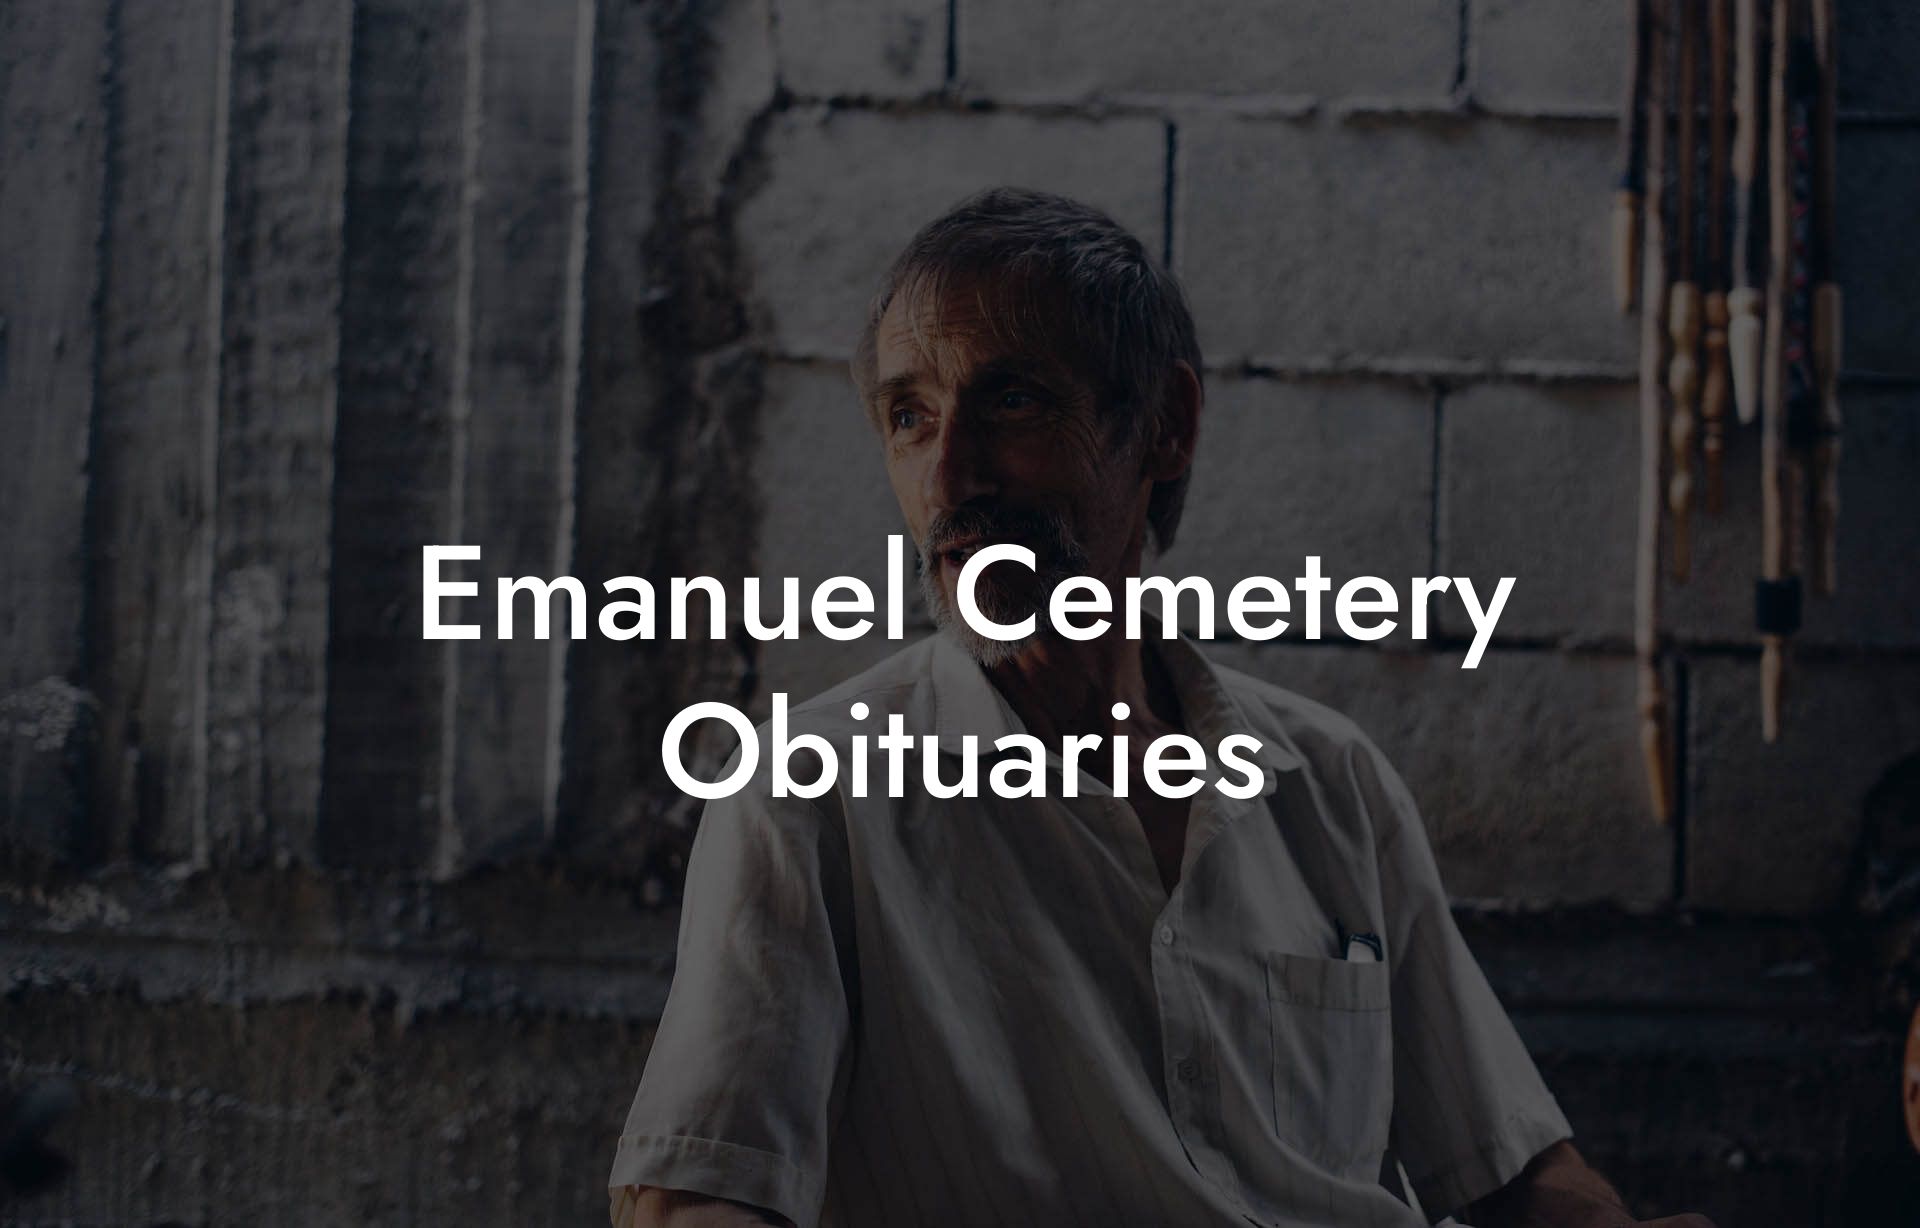 Emanuel Cemetery Obituaries